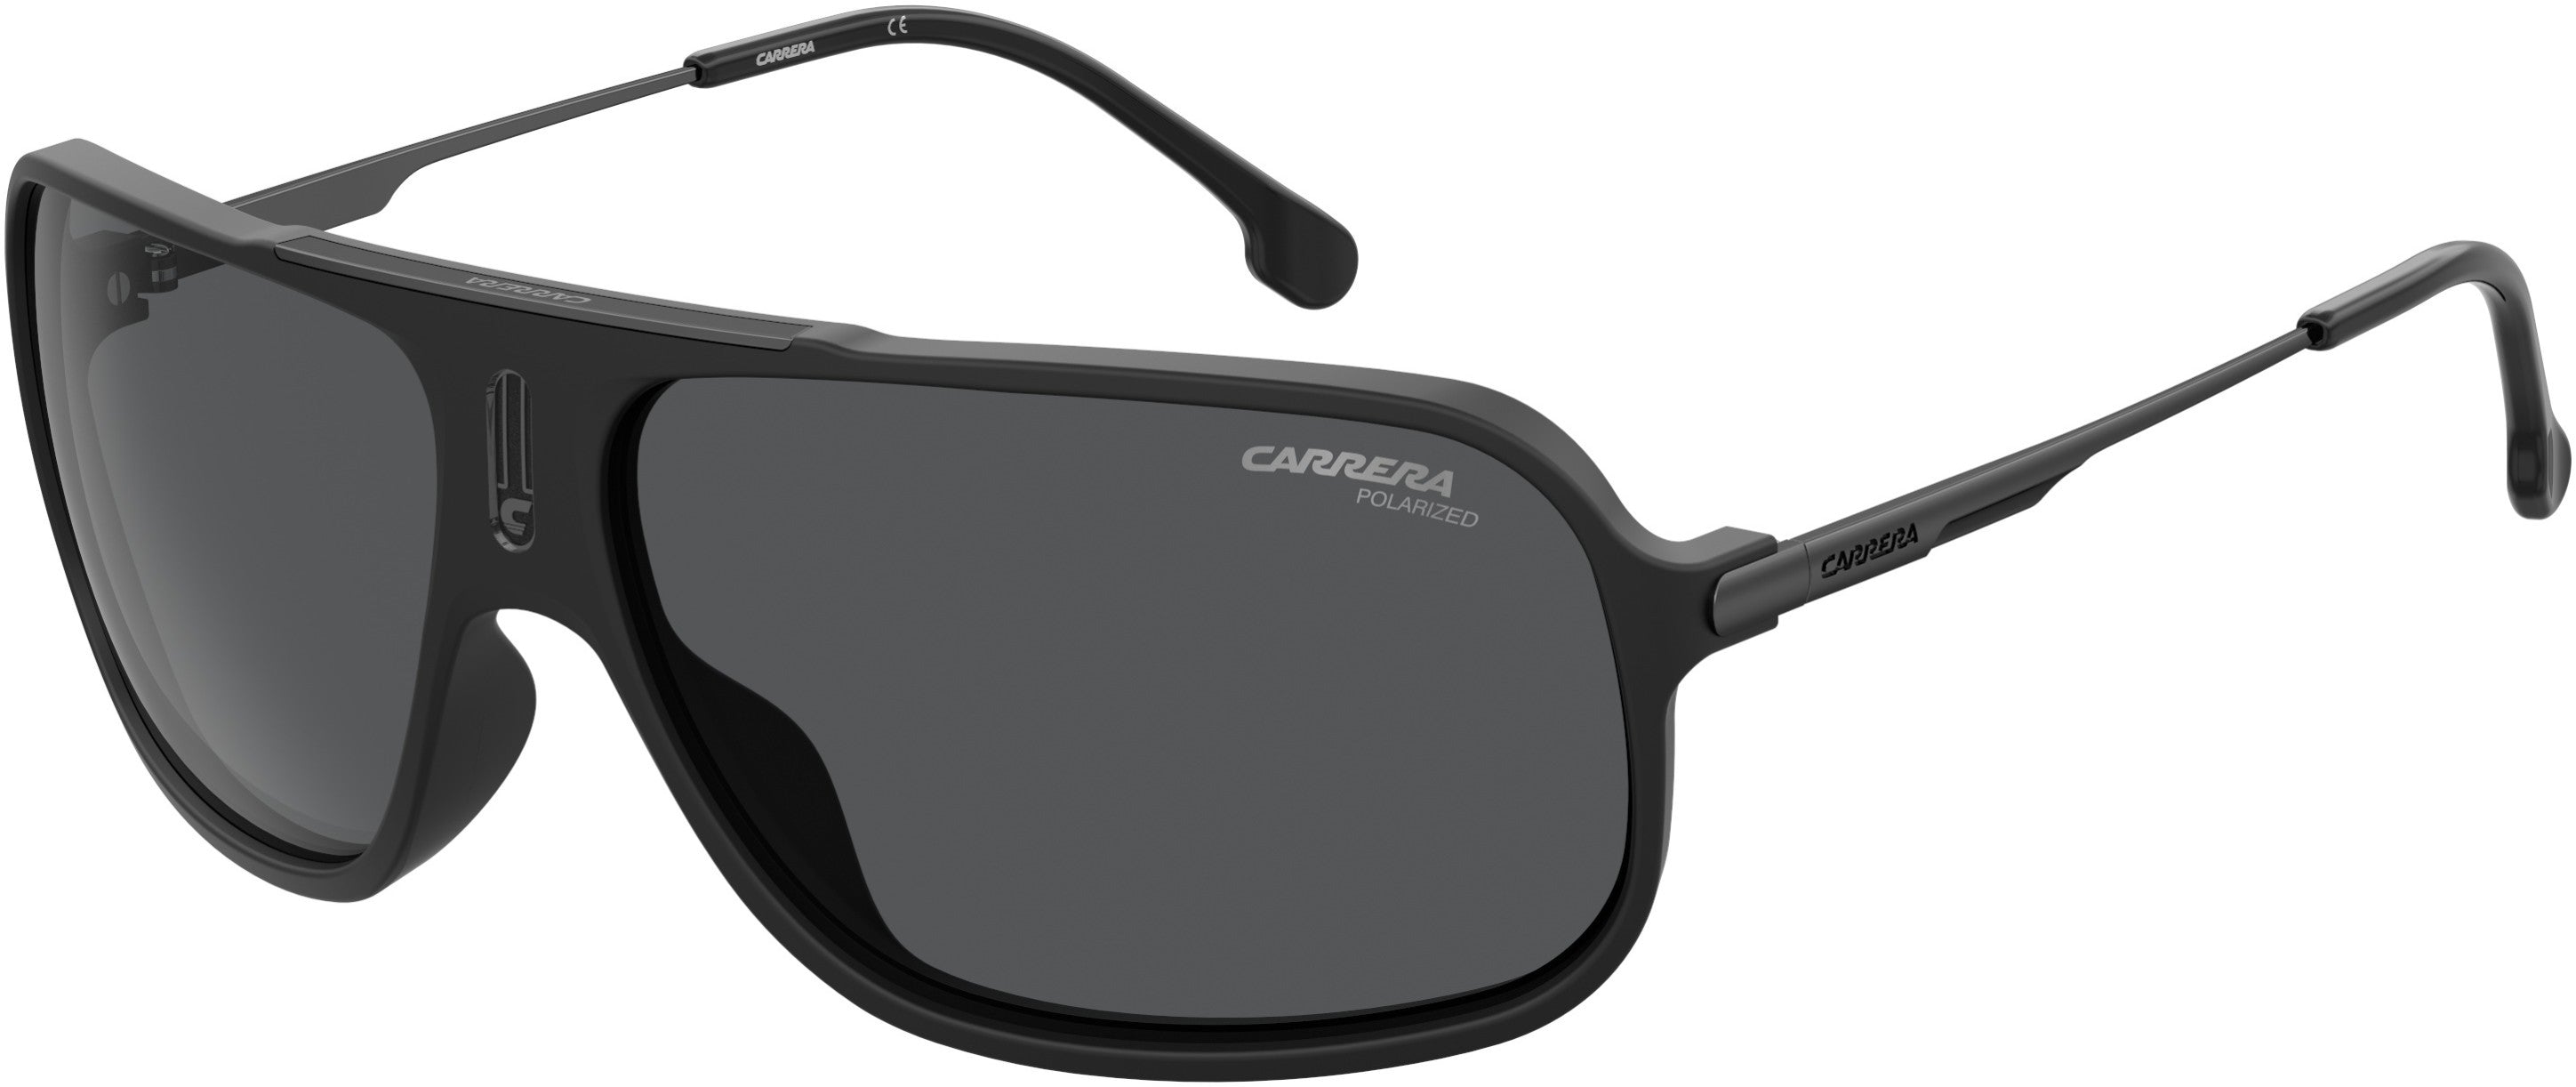 Carrera Cool 65 Rectangular Sunglasses 0003-0003  Matte Black (M9 Gray Pz)